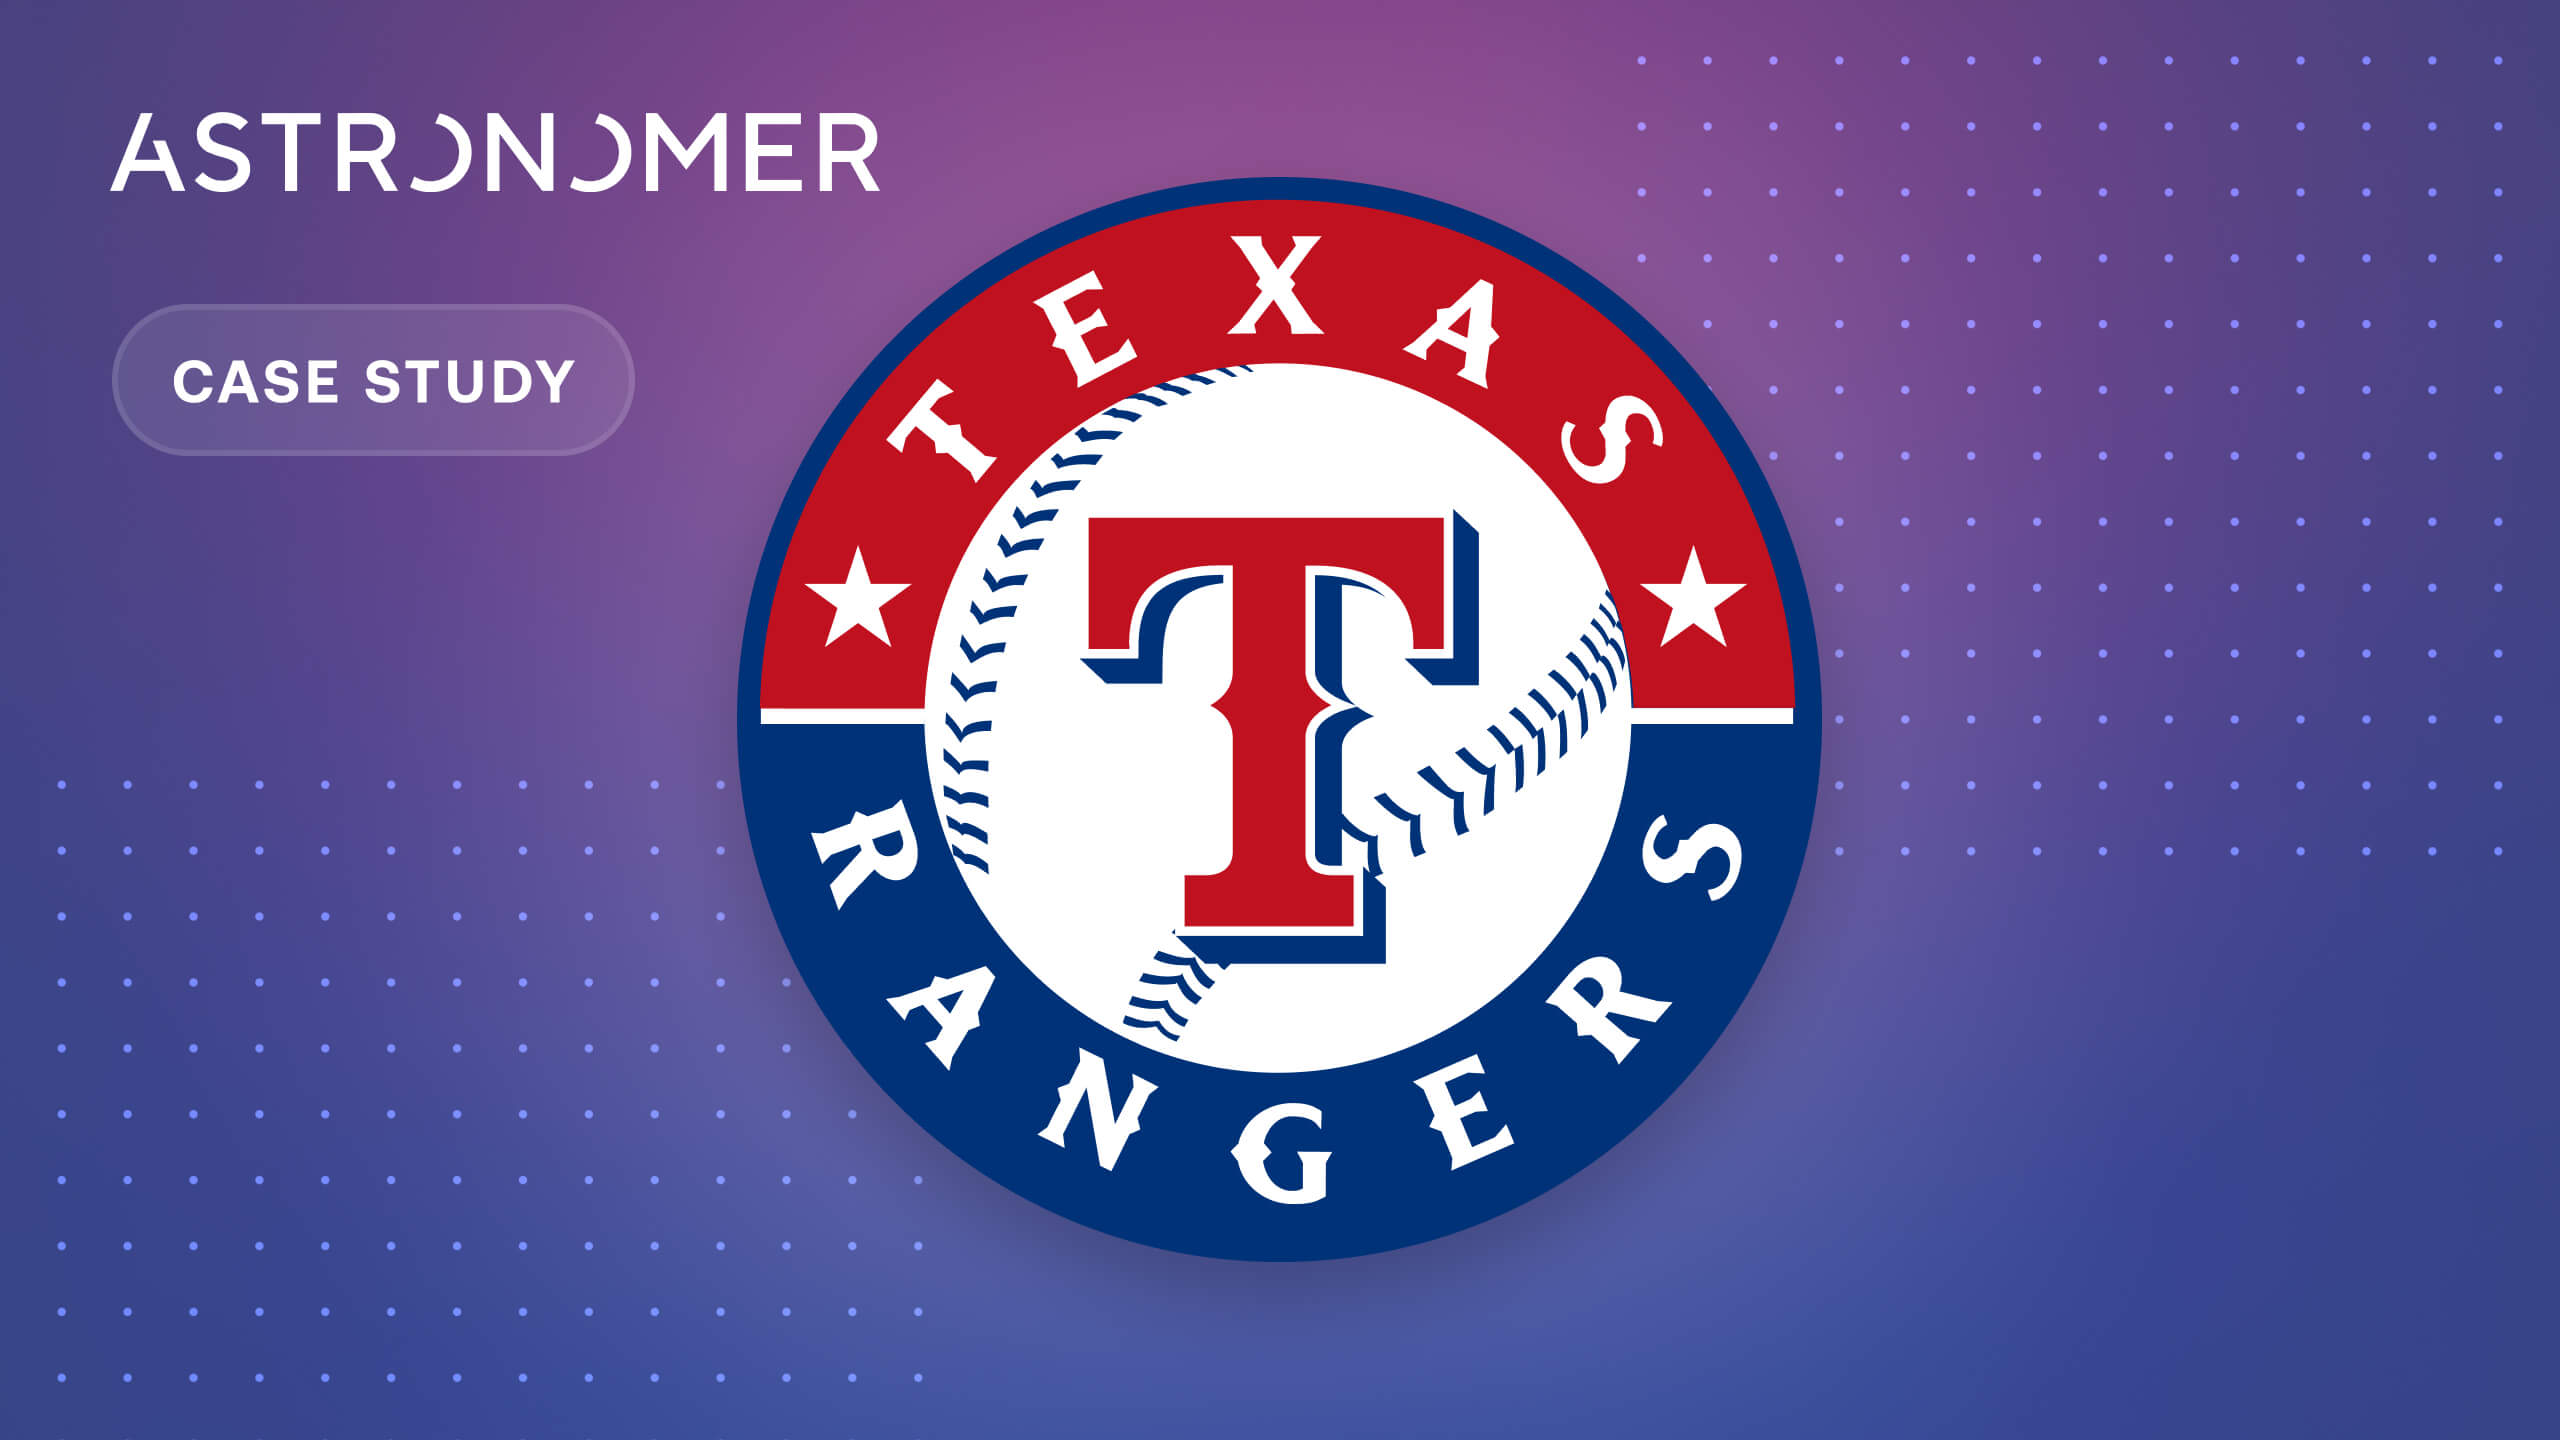 Texas Rangers News, Scores, Statistics - Baseball MLB